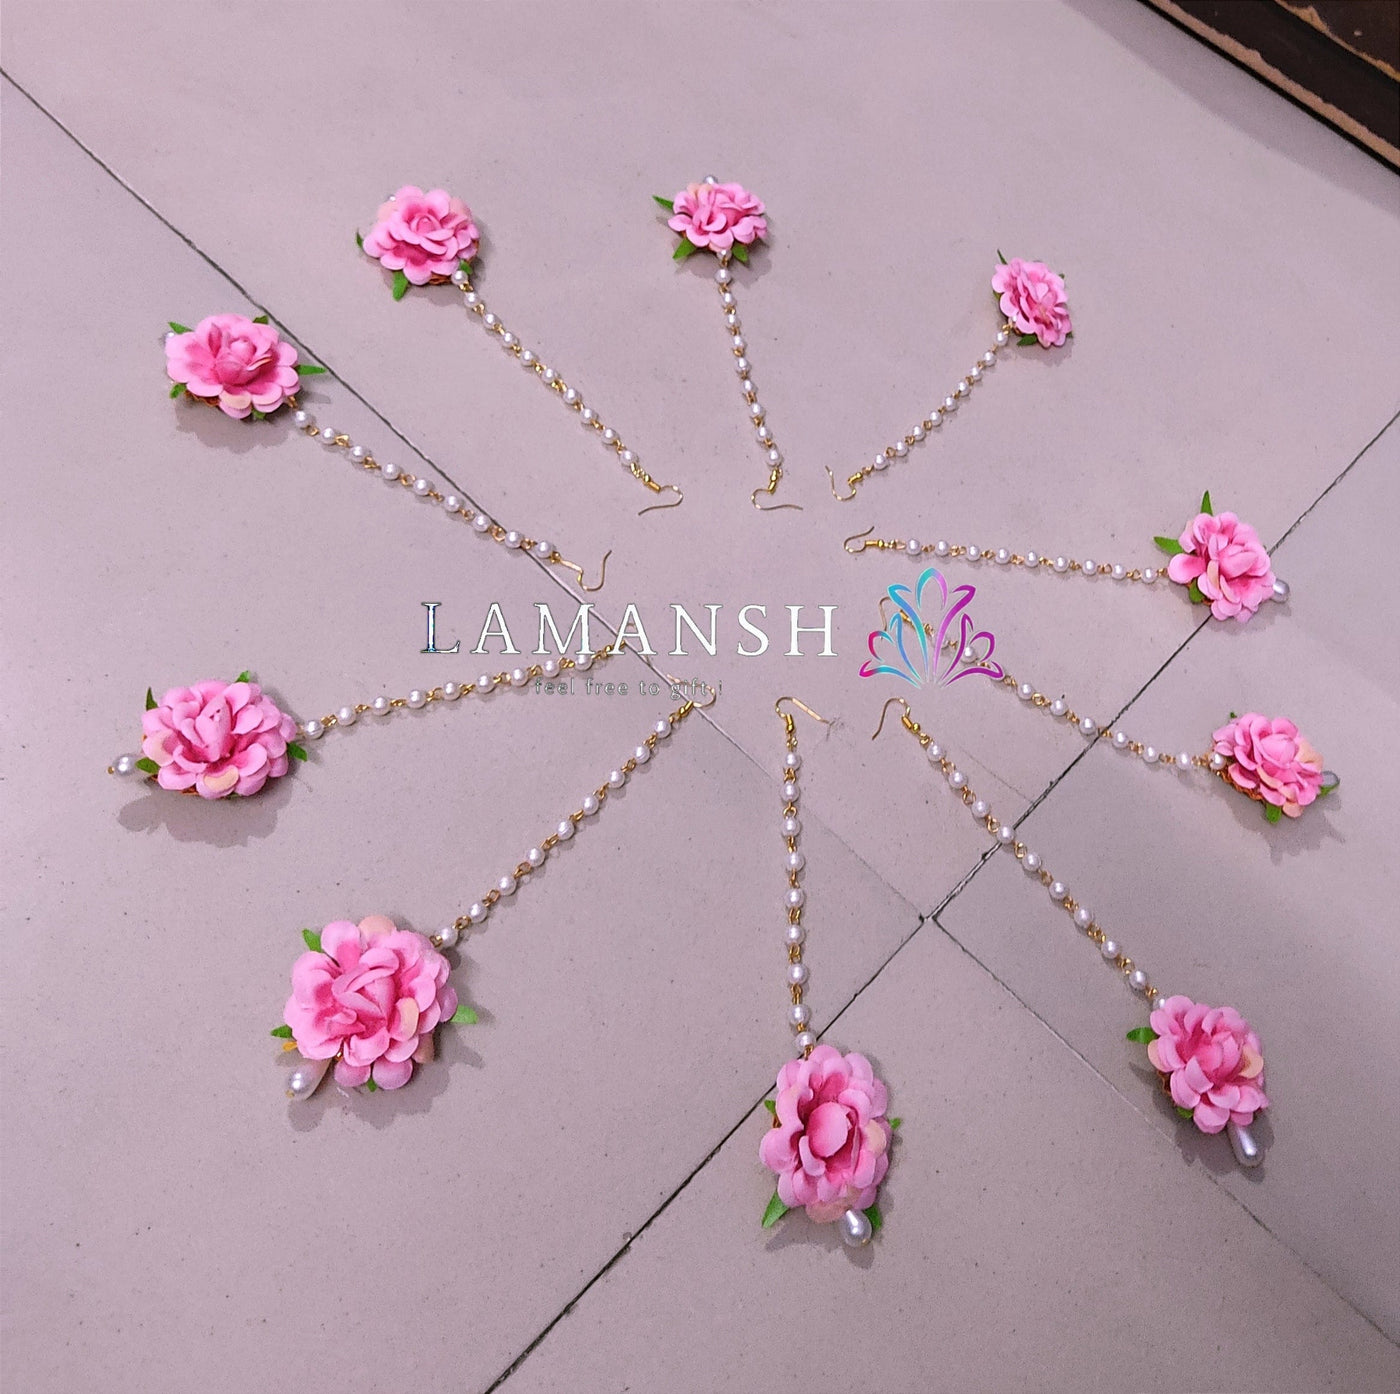 LAMANSH Floral 🌺 Giveaways LAMANSH® Floral Teeka's for Haldi & Mehendi Ceremony Favors / 2 colors options